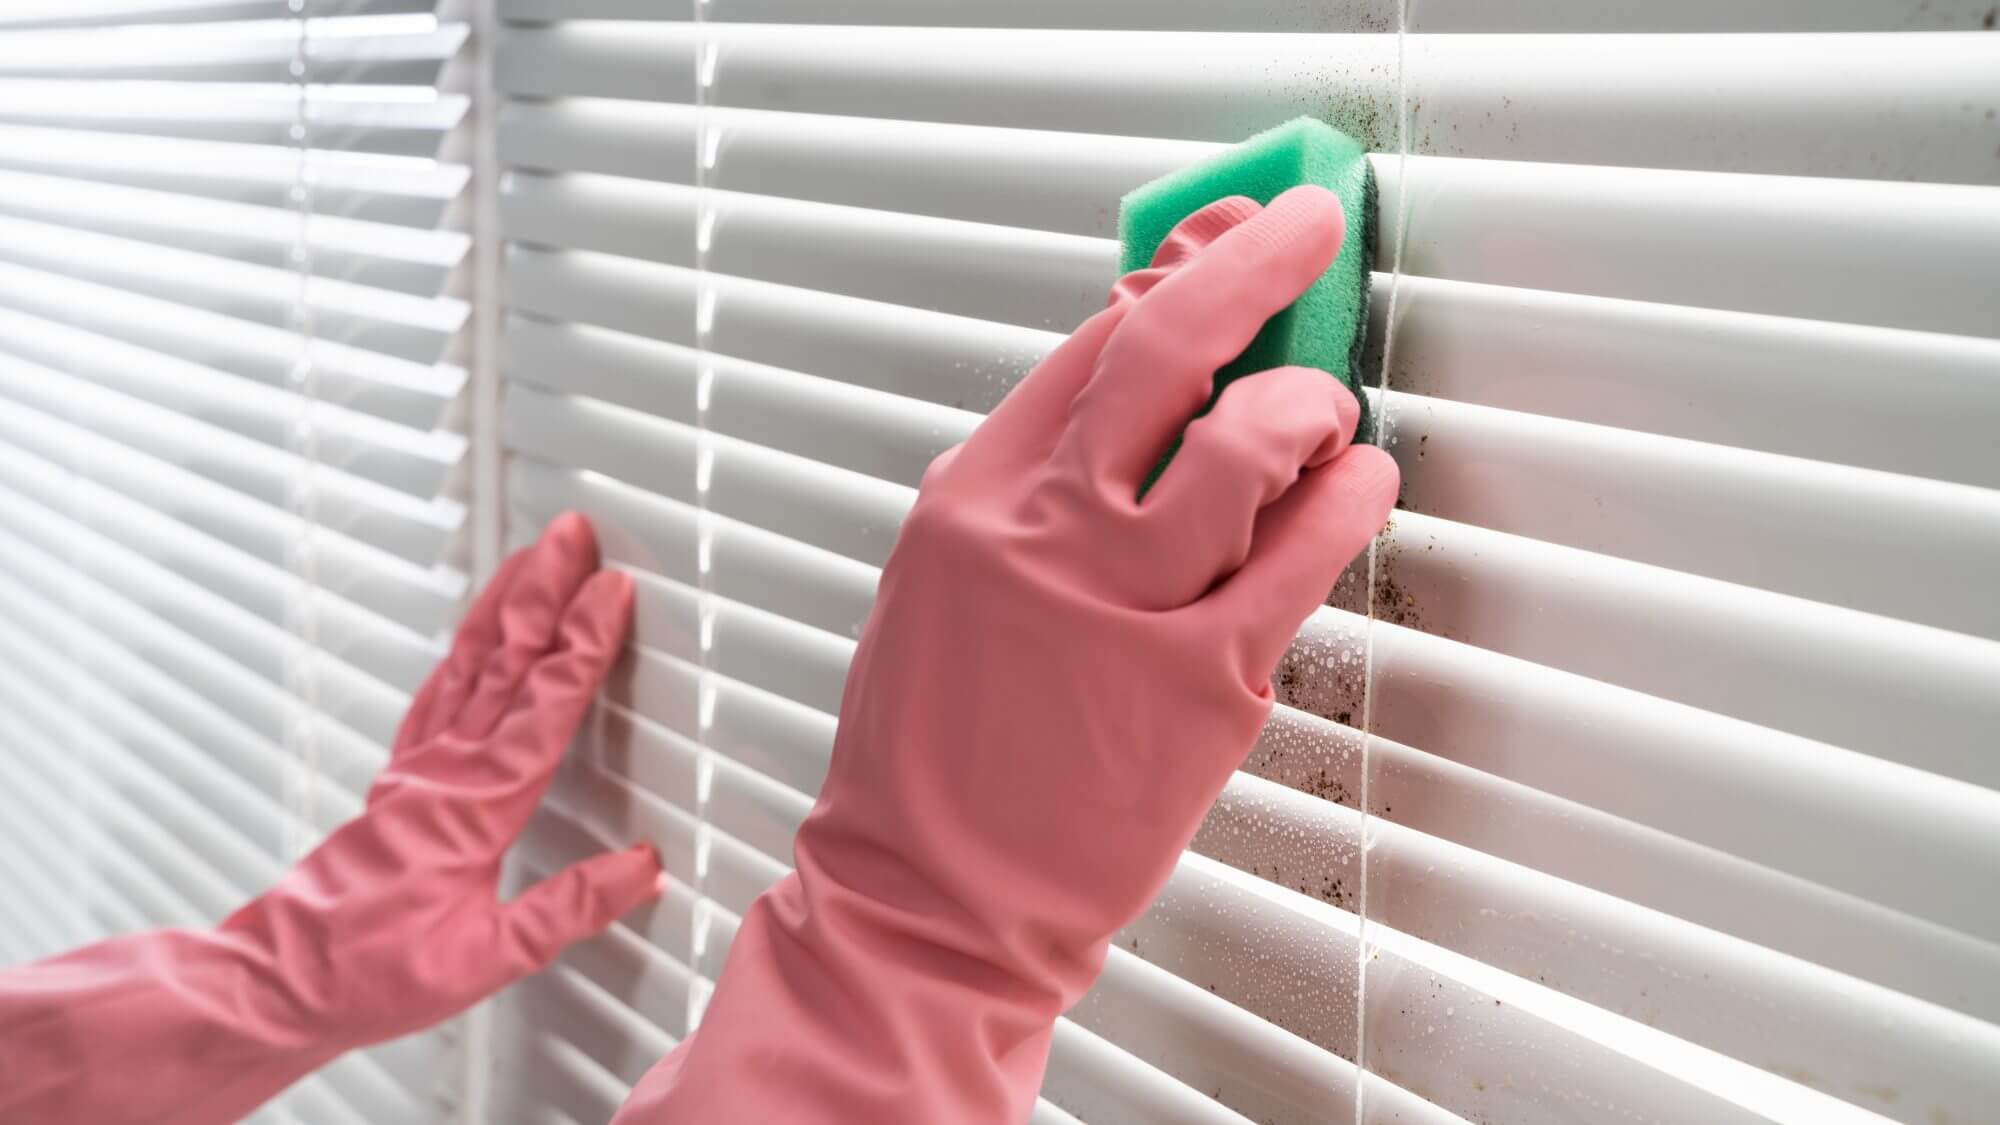 14- Wash windows, blinds